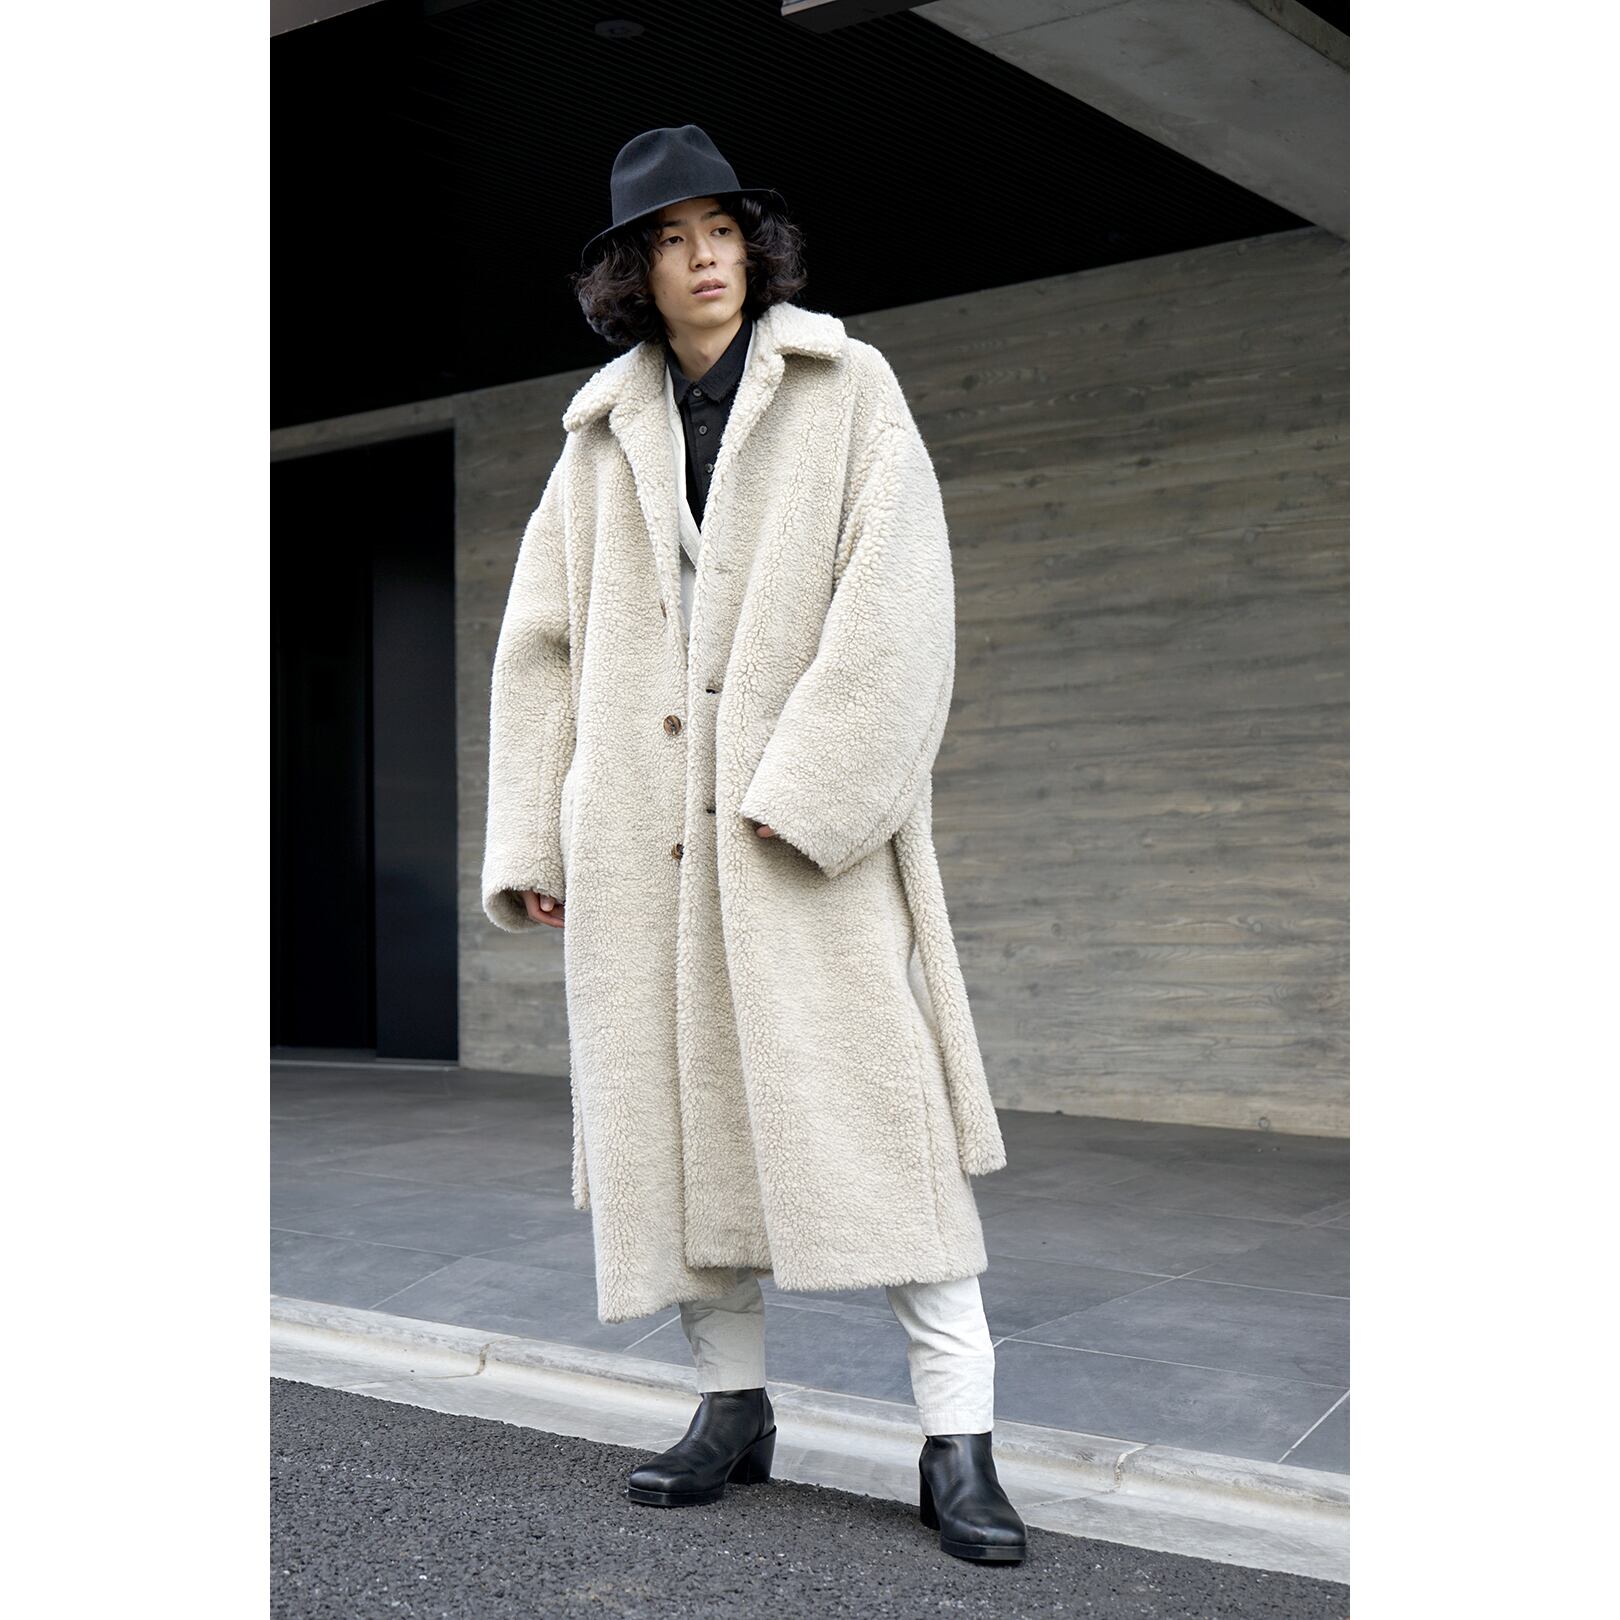 Blanc YM] (ブランワイエム) BL-21A-WPBC Wool Pile Balmacaan coat ...